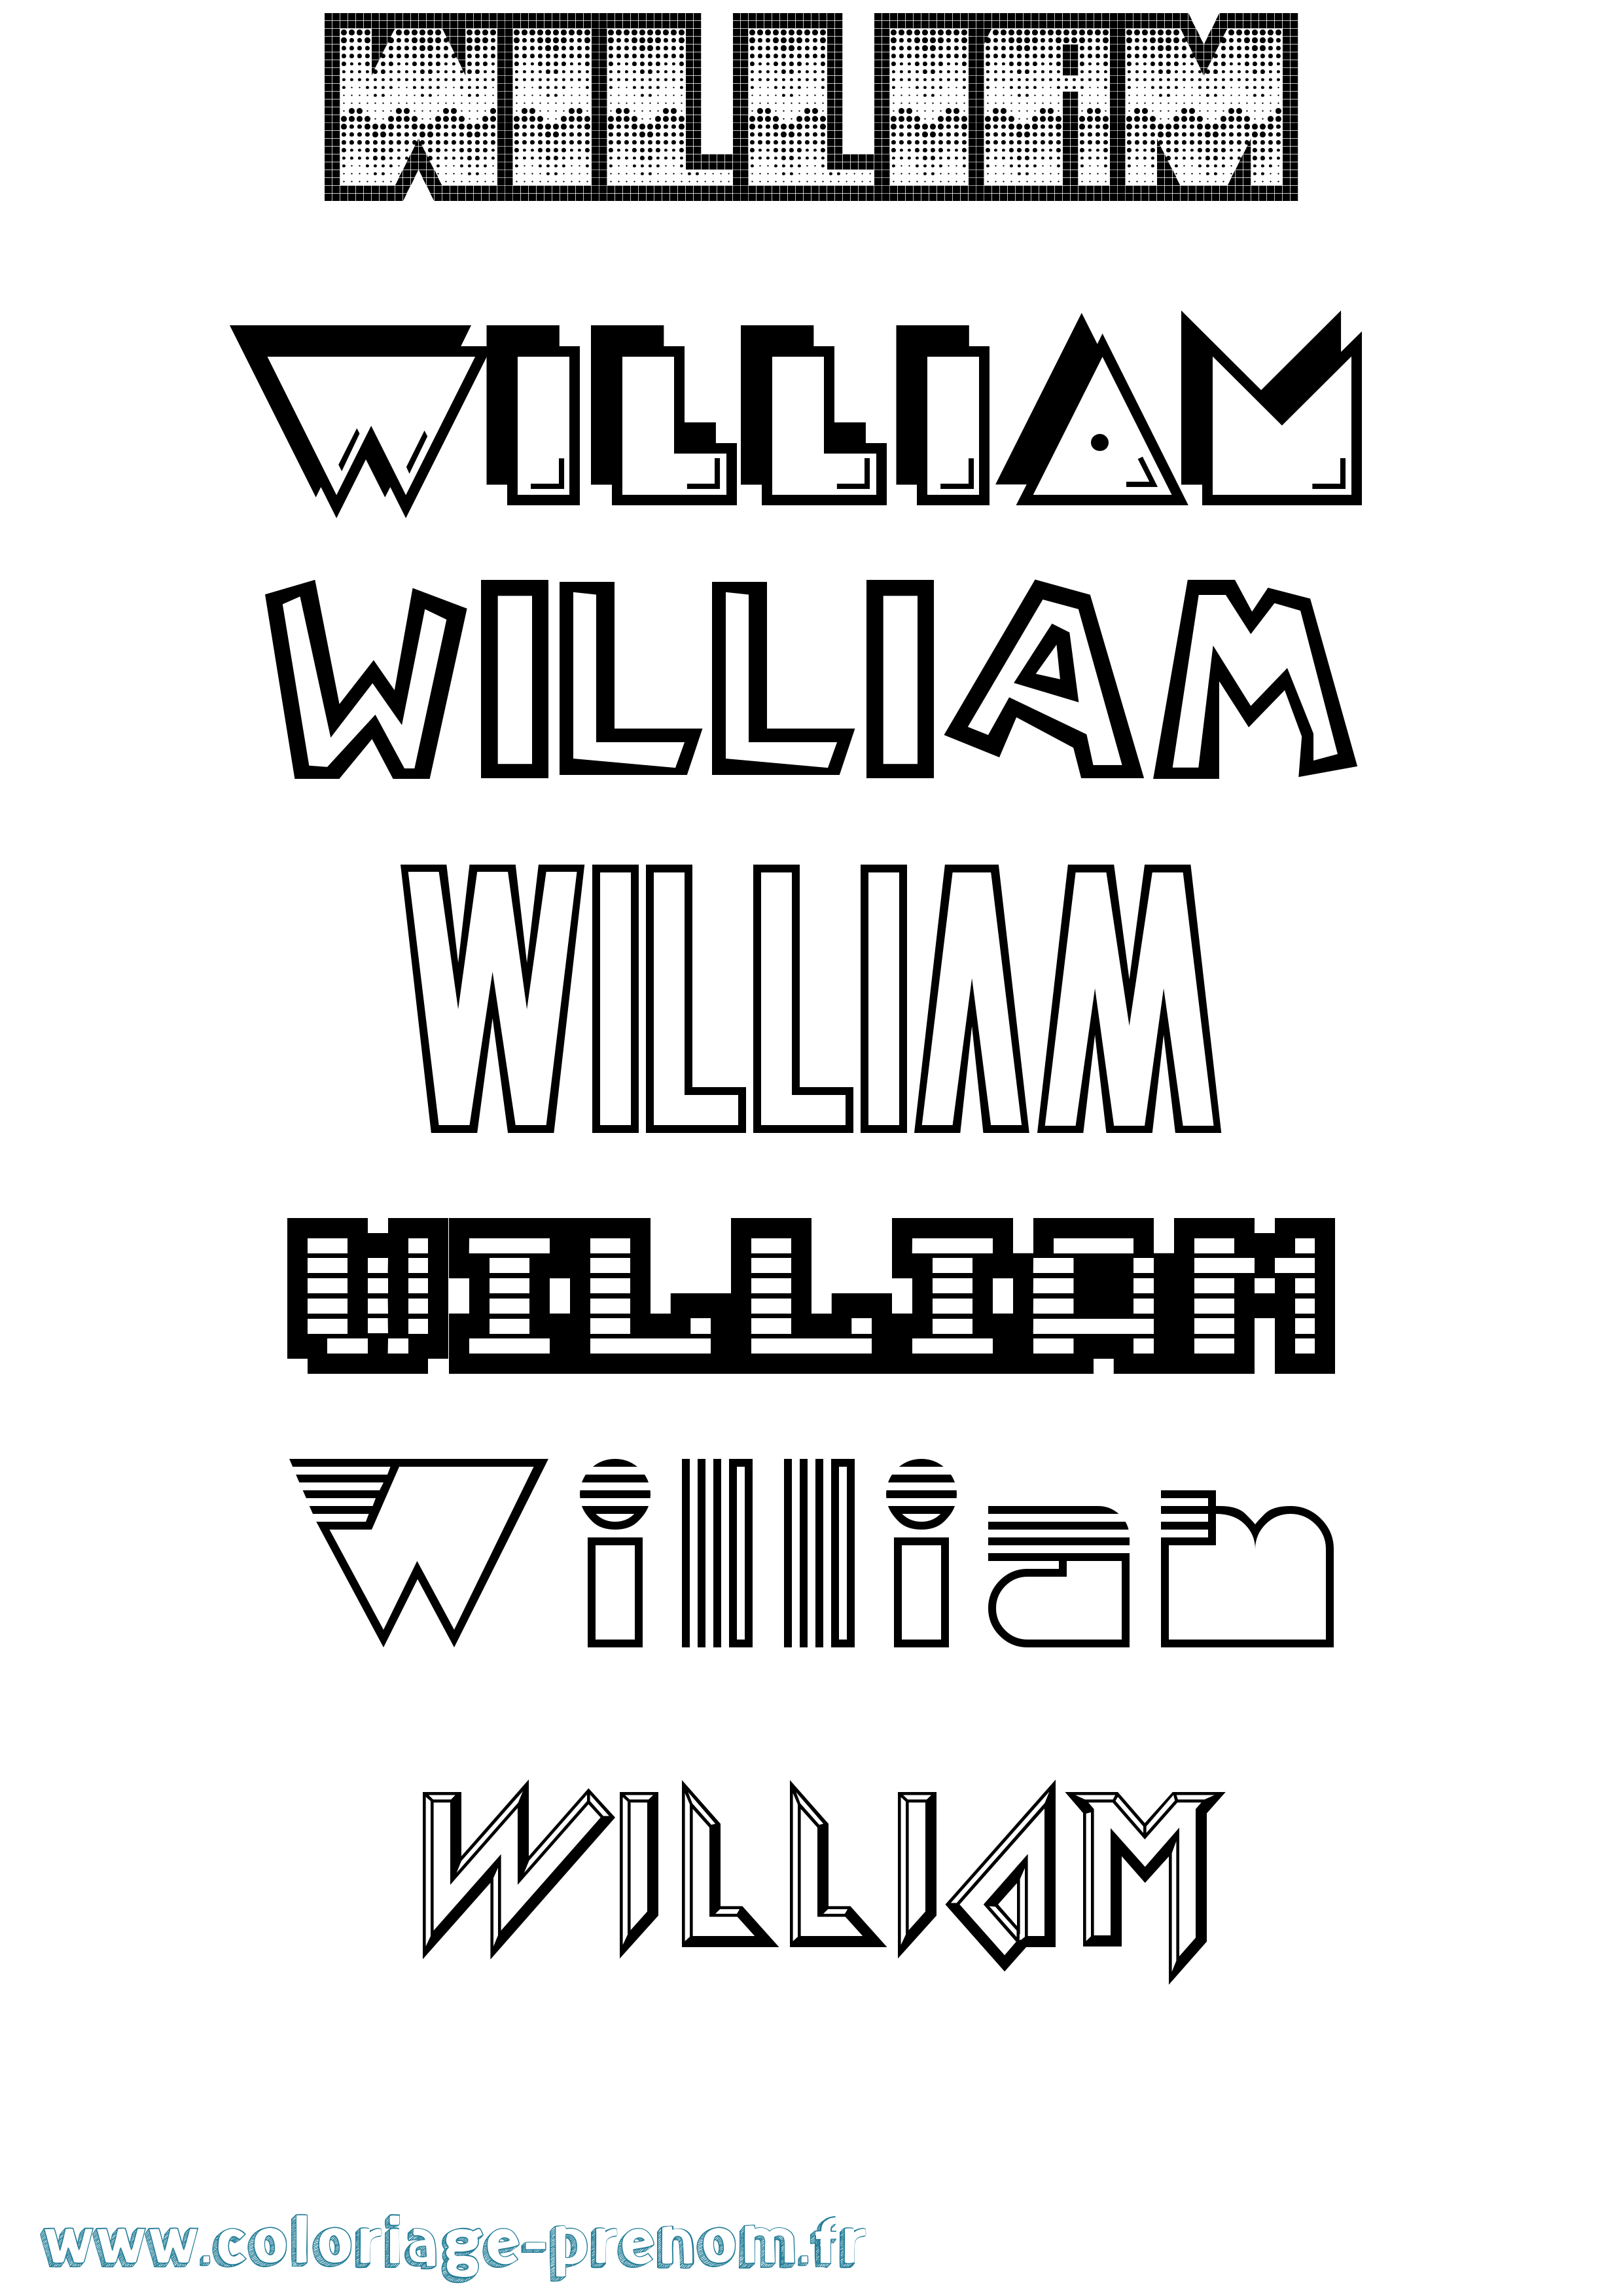 Coloriage prénom William